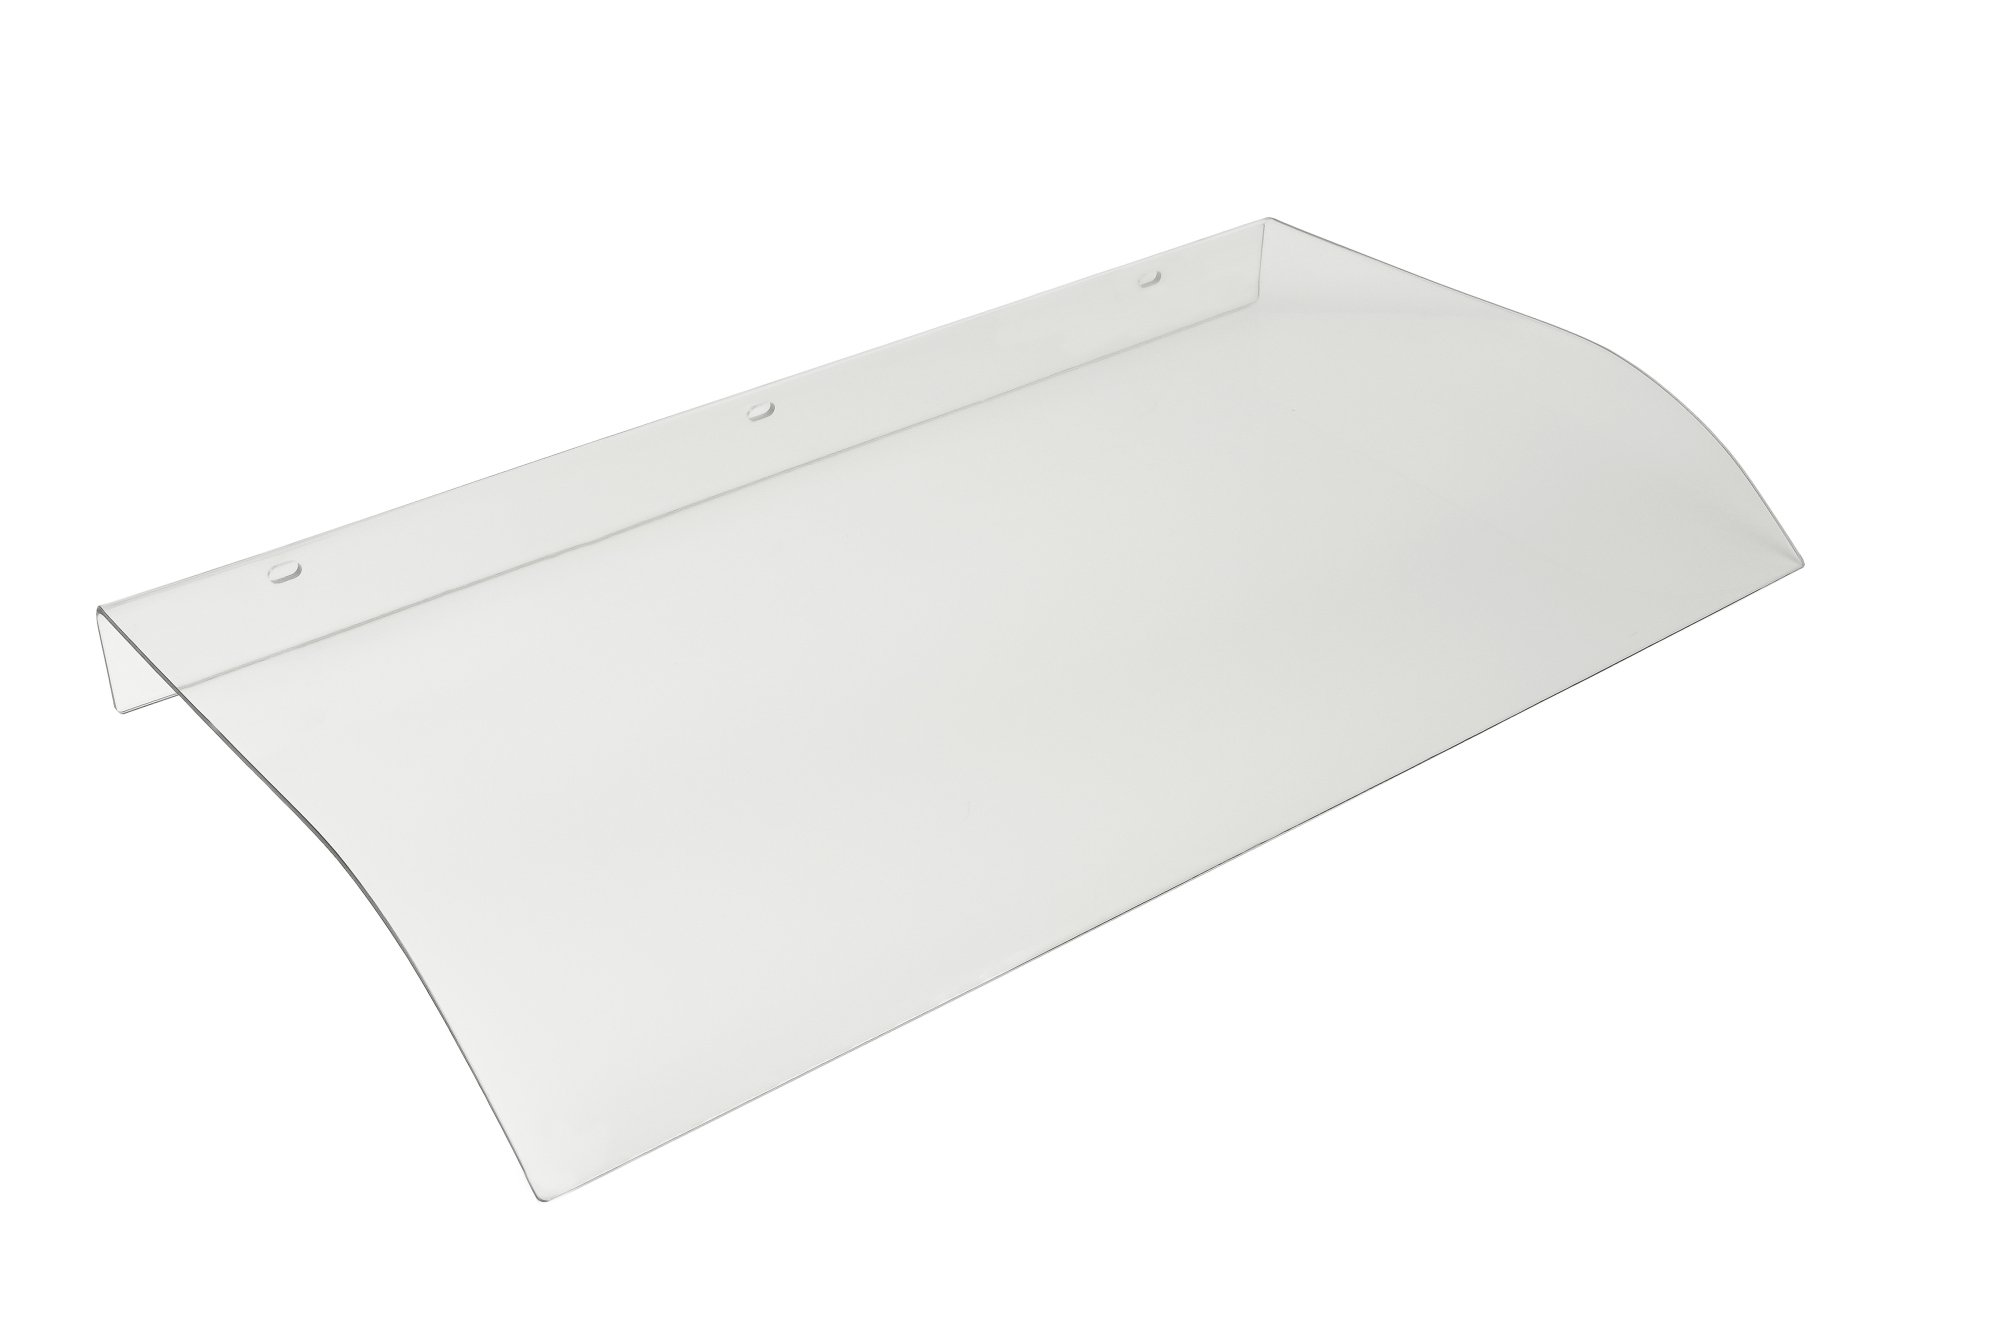 Wallbox-Überdachung - Regenschutz - UV-resistent - B 60 cm x T 34 cm